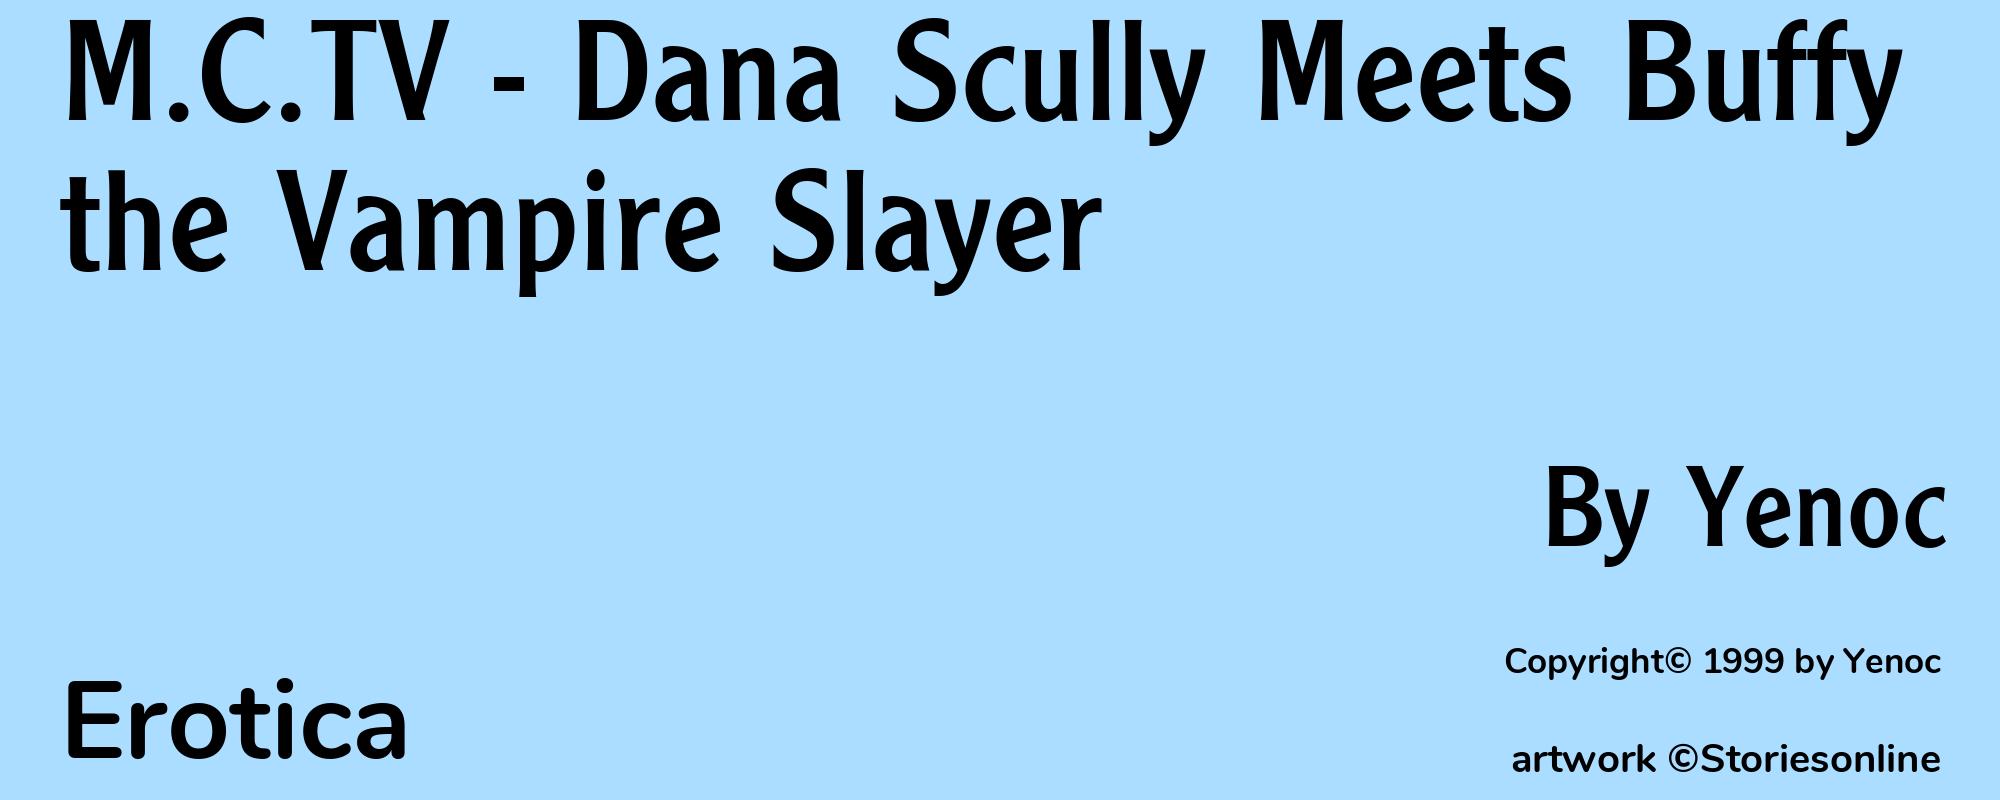 M.C.TV - Dana Scully Meets Buffy the Vampire Slayer - Cover